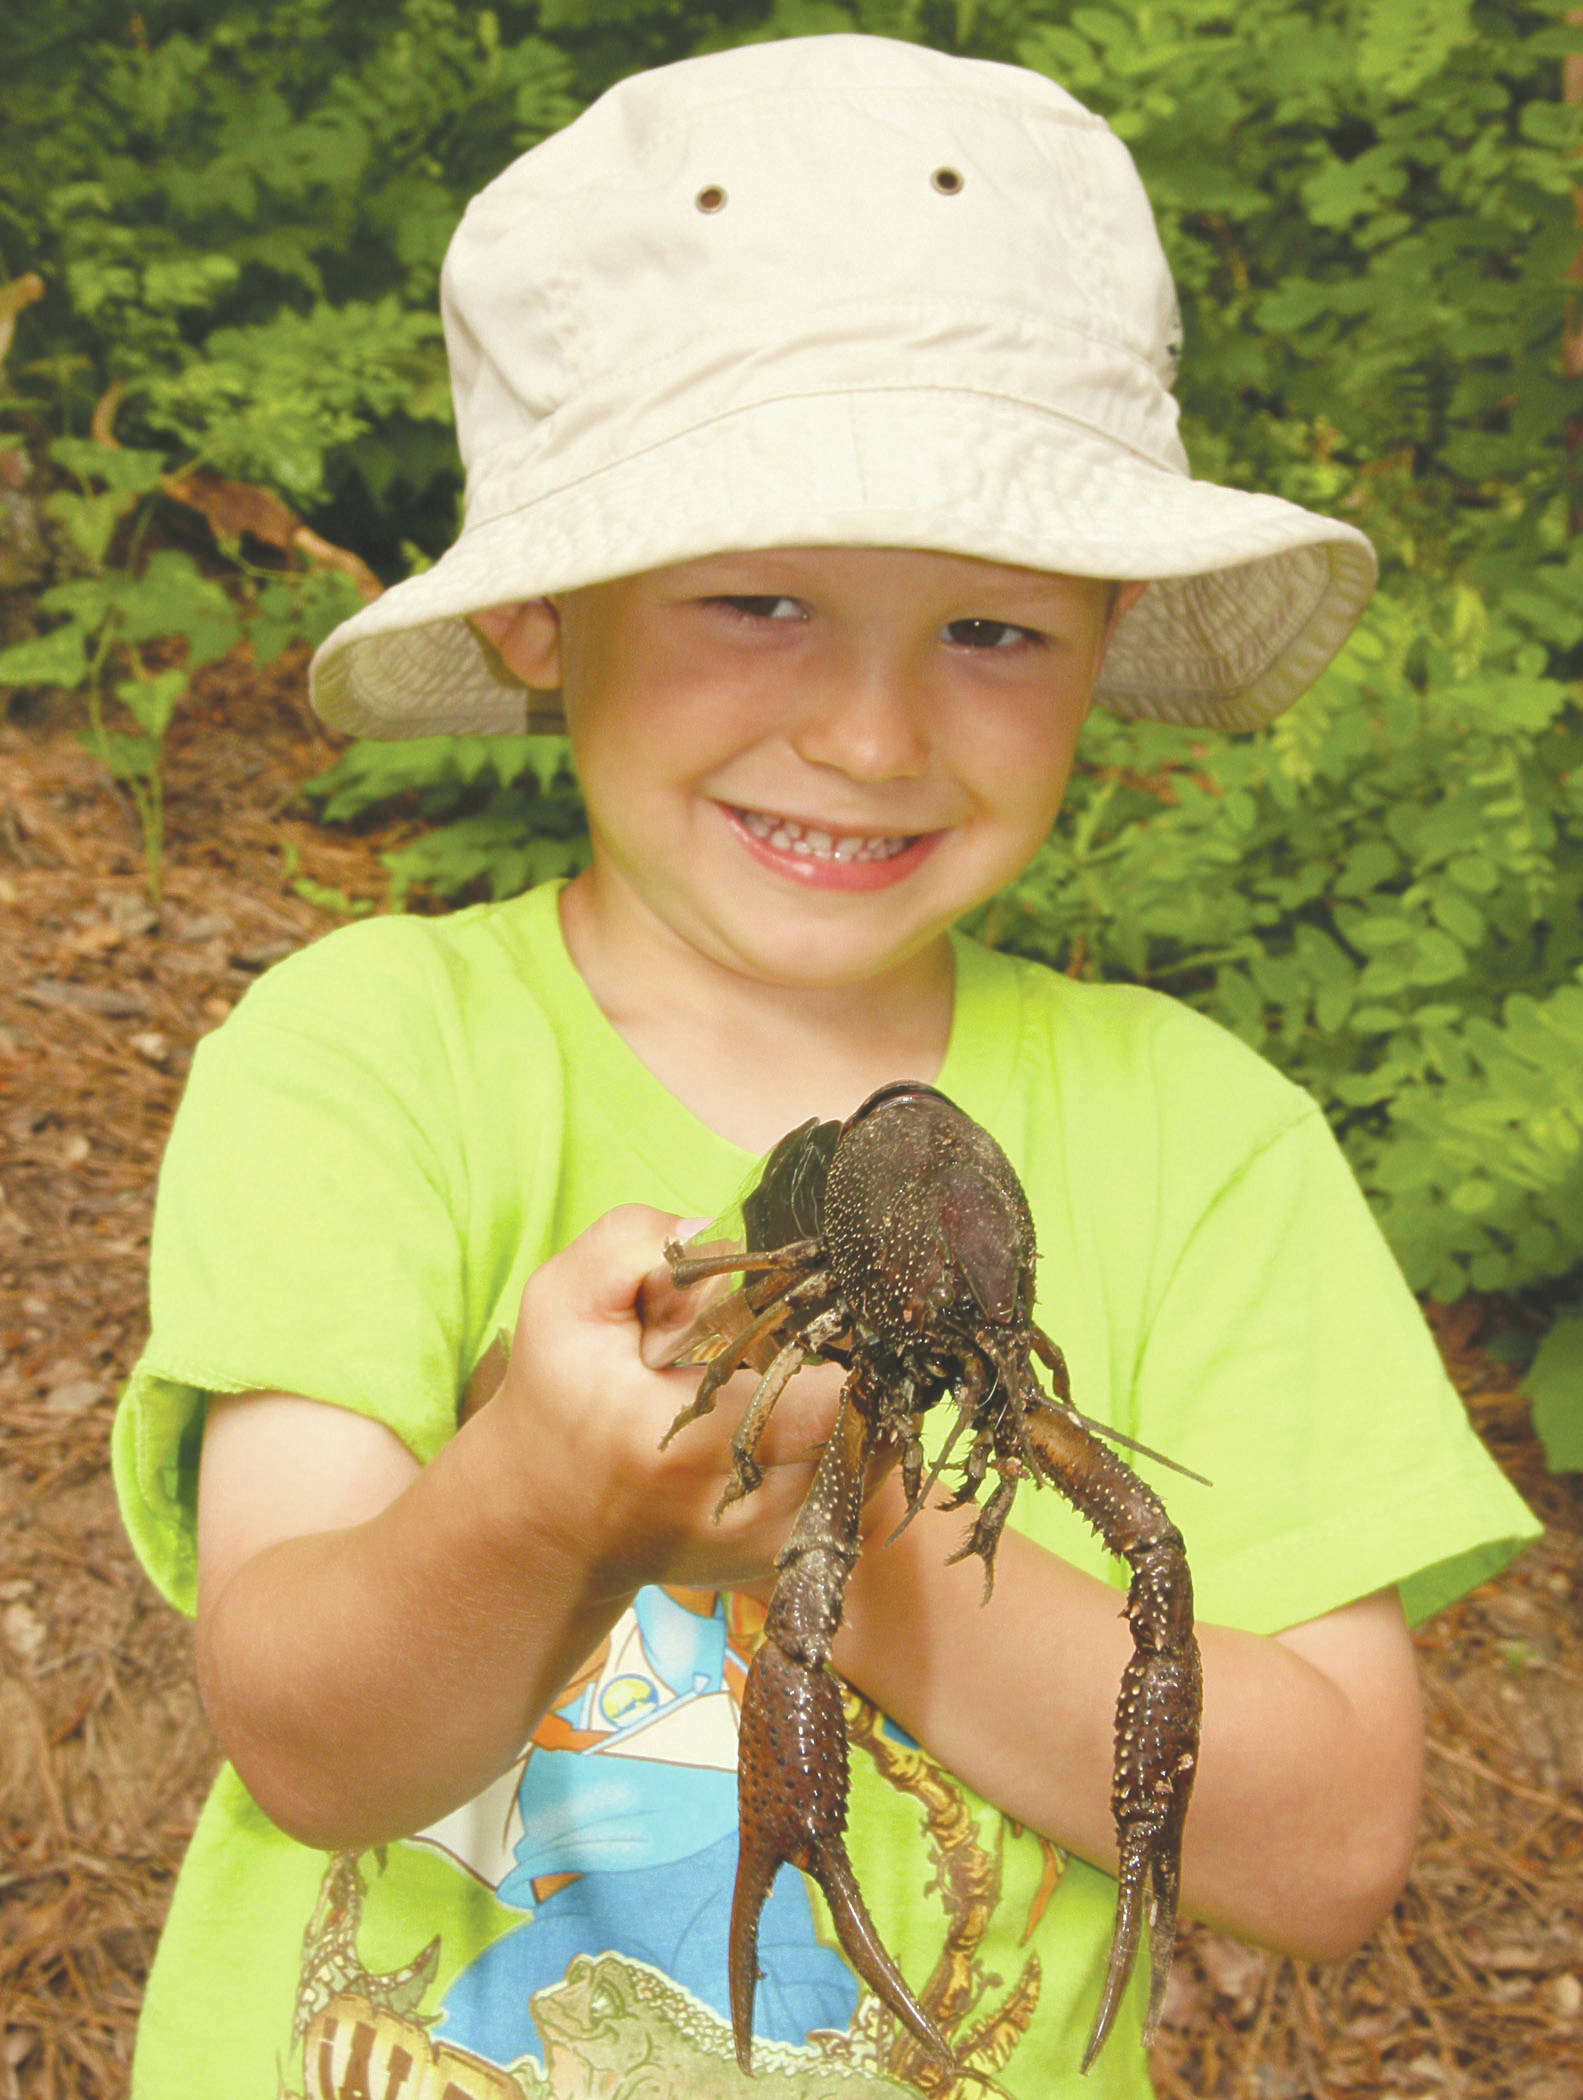 Wyatt, at age 4, helping dad harvest crawfish at White River NWR in Arkansas. (Photo by Matt Conner/USFWS)